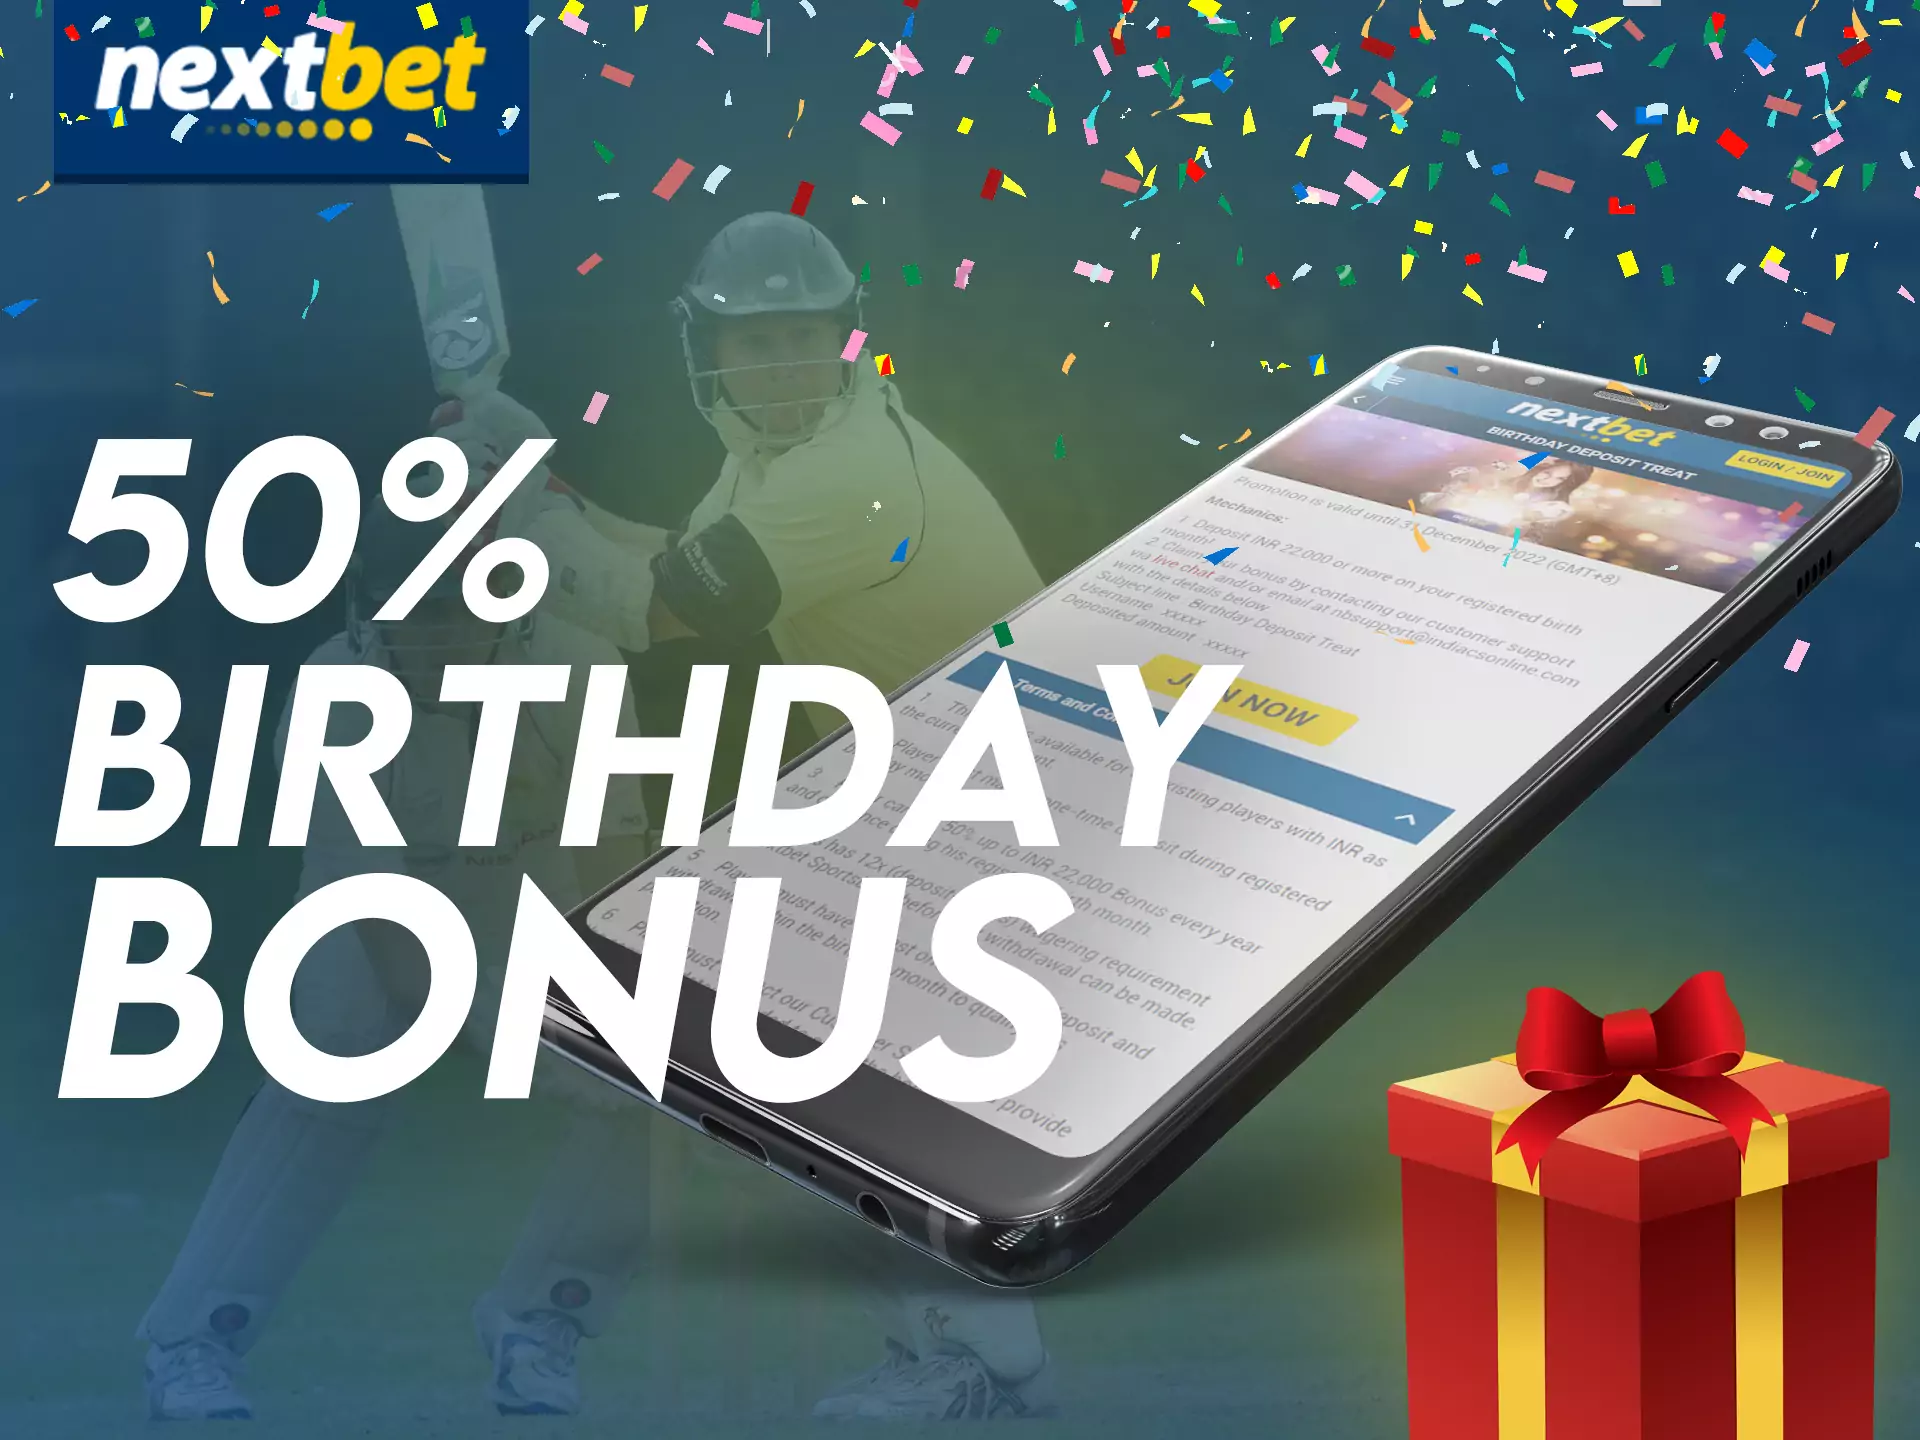 Get a special birthday bonus on Nextbet.